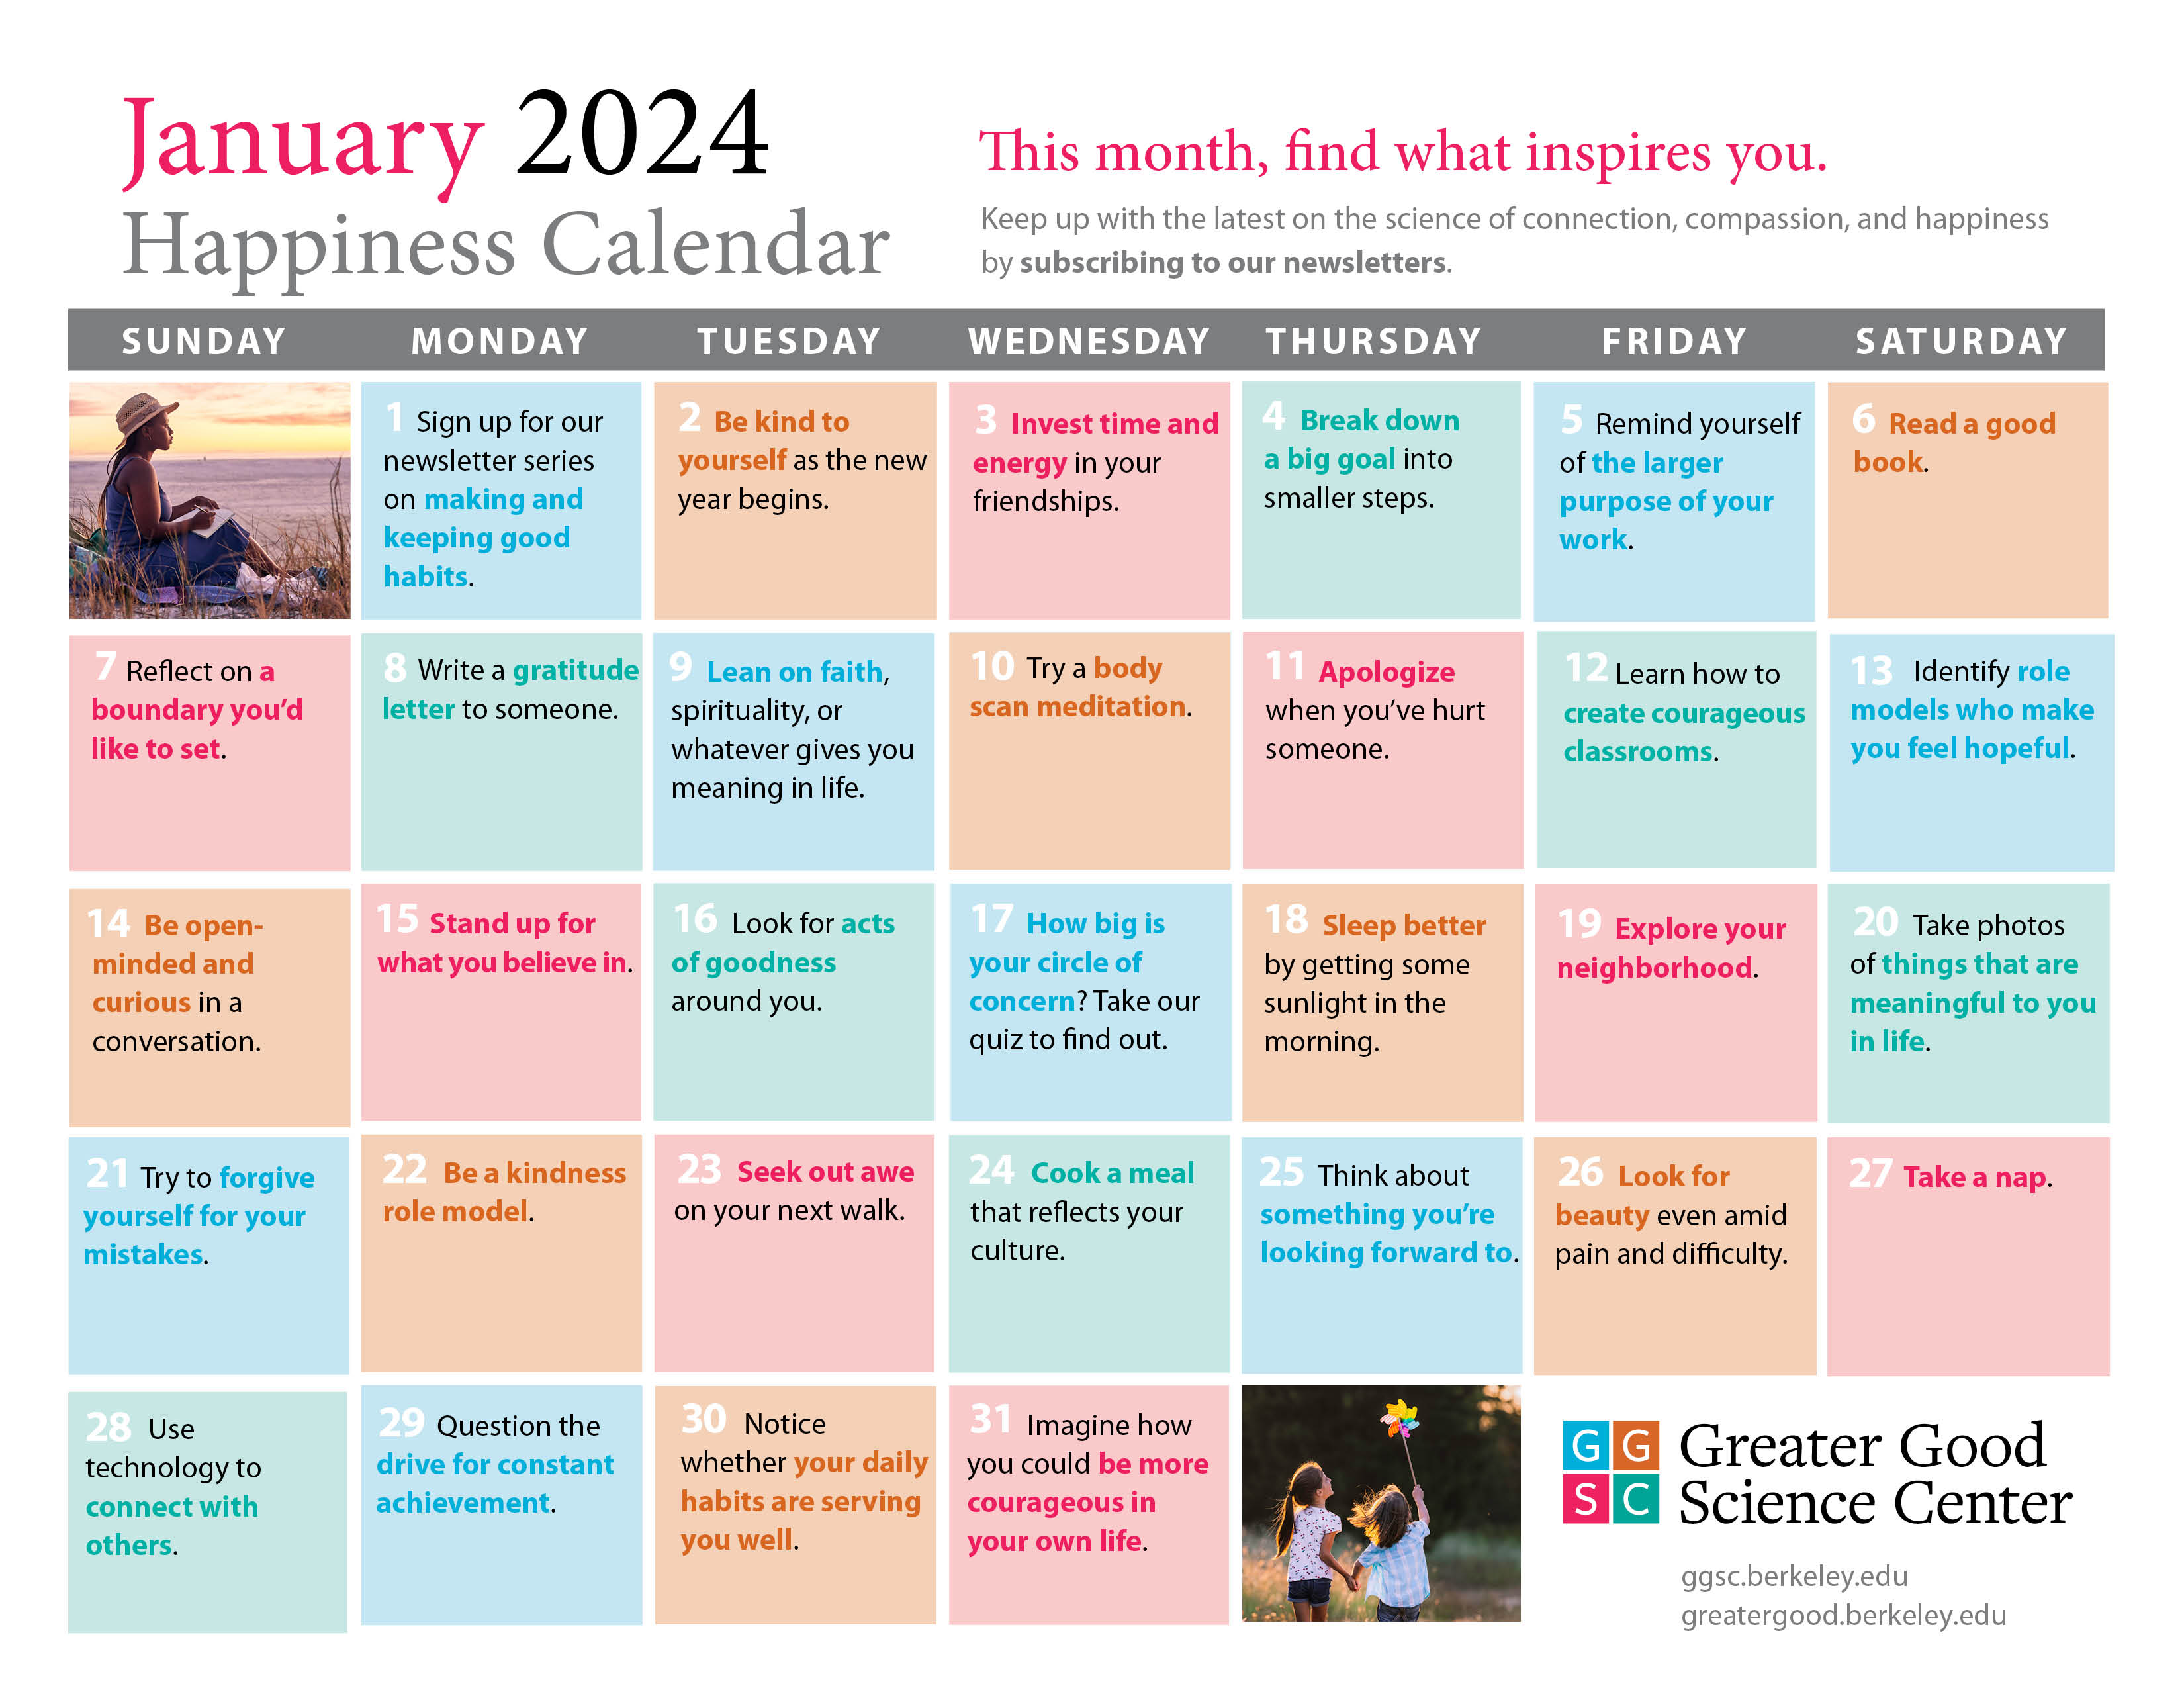 January 2024 happiness calendar